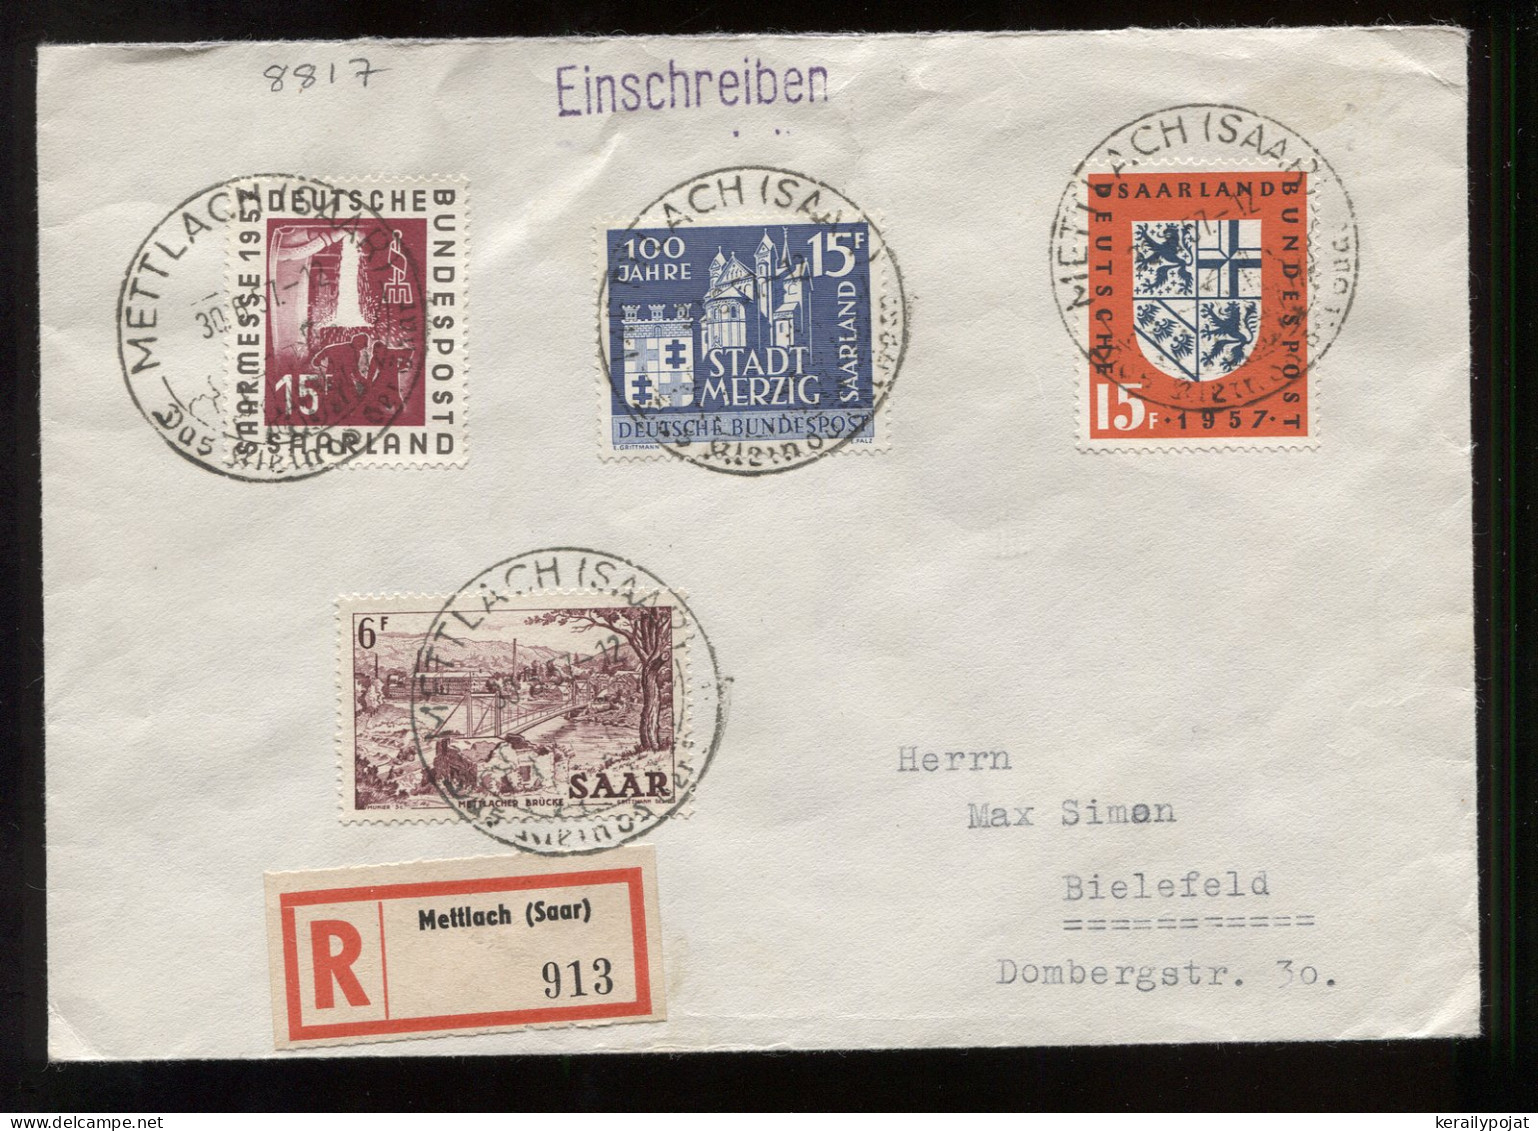 Saarland 1957 Mettlach Registered Cover To Bielefeld__(8817) - Storia Postale